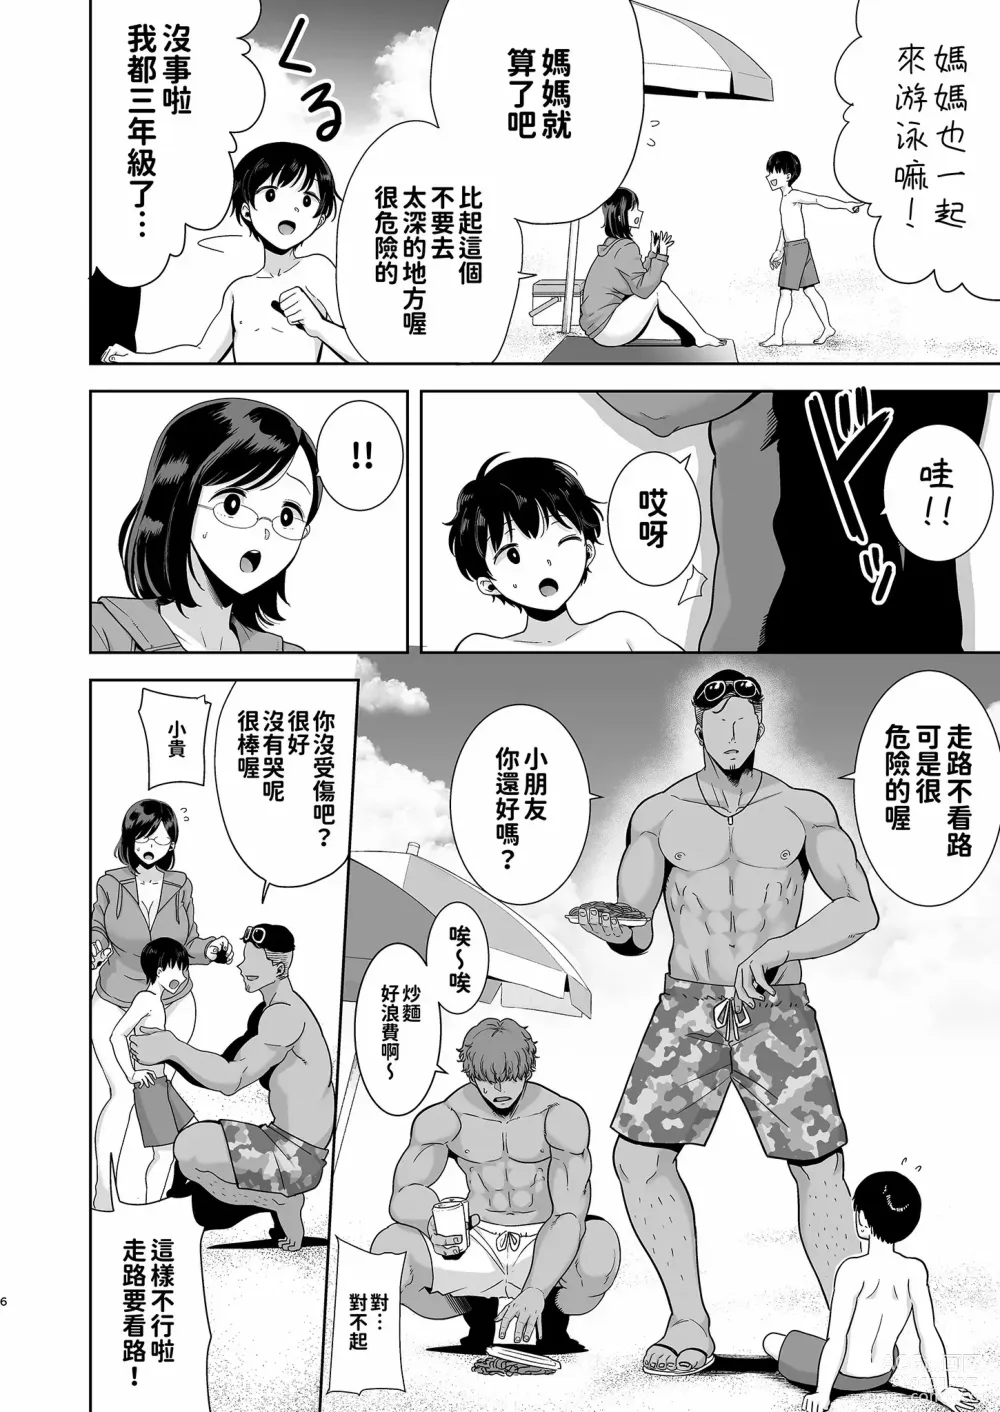 Page 6 of manga 夏妻1+2